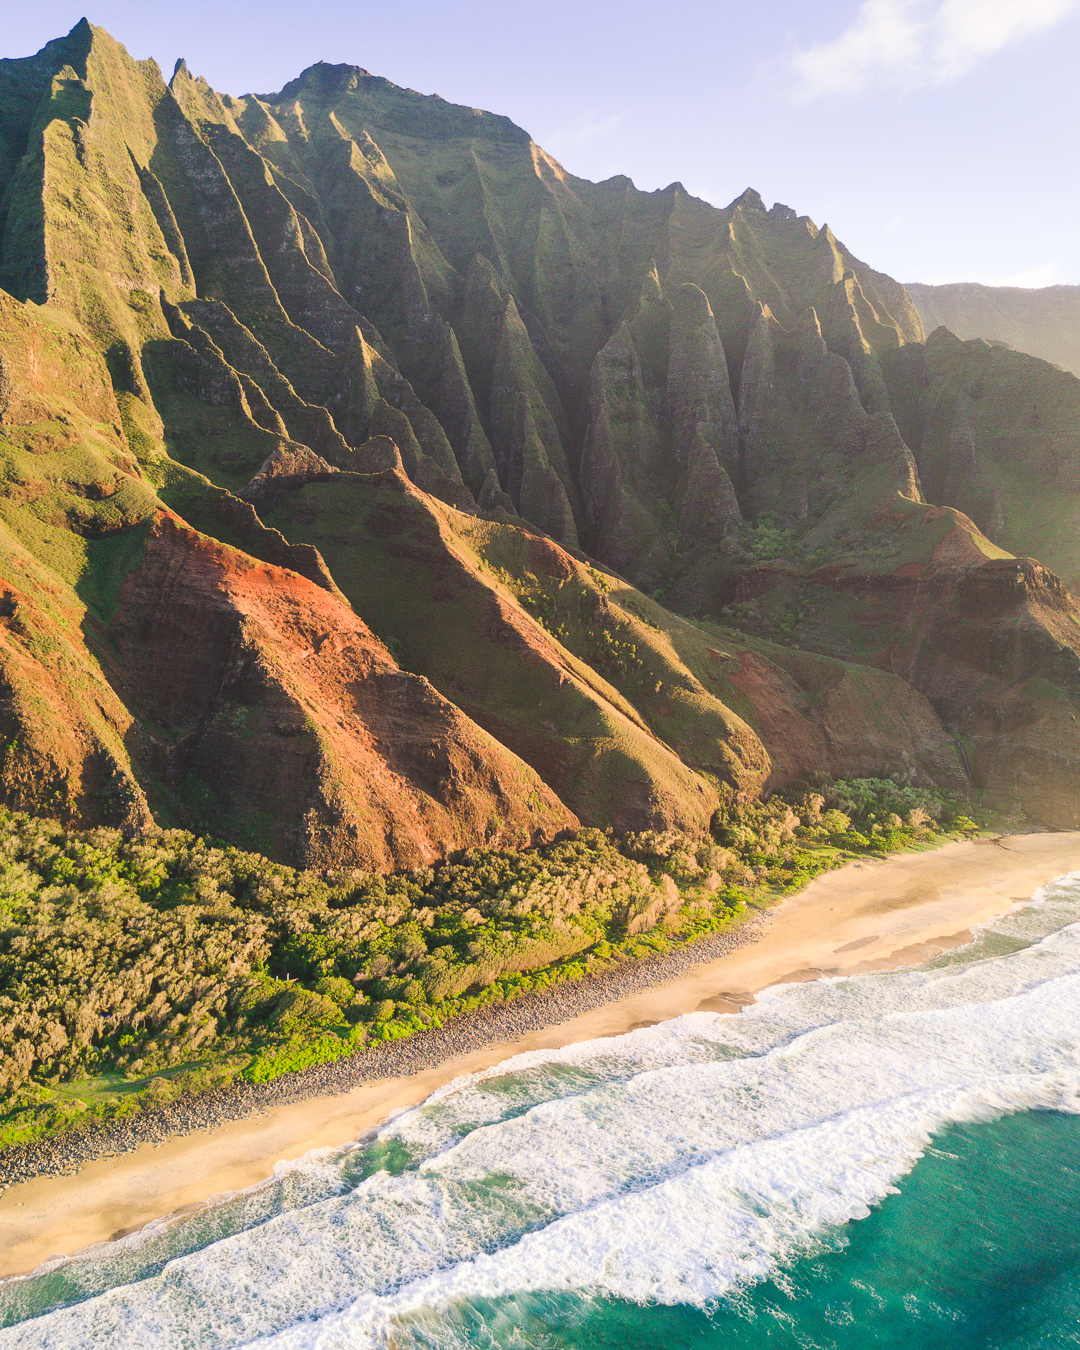 The famous ridges that define the Na Pali Coast in Kauai.